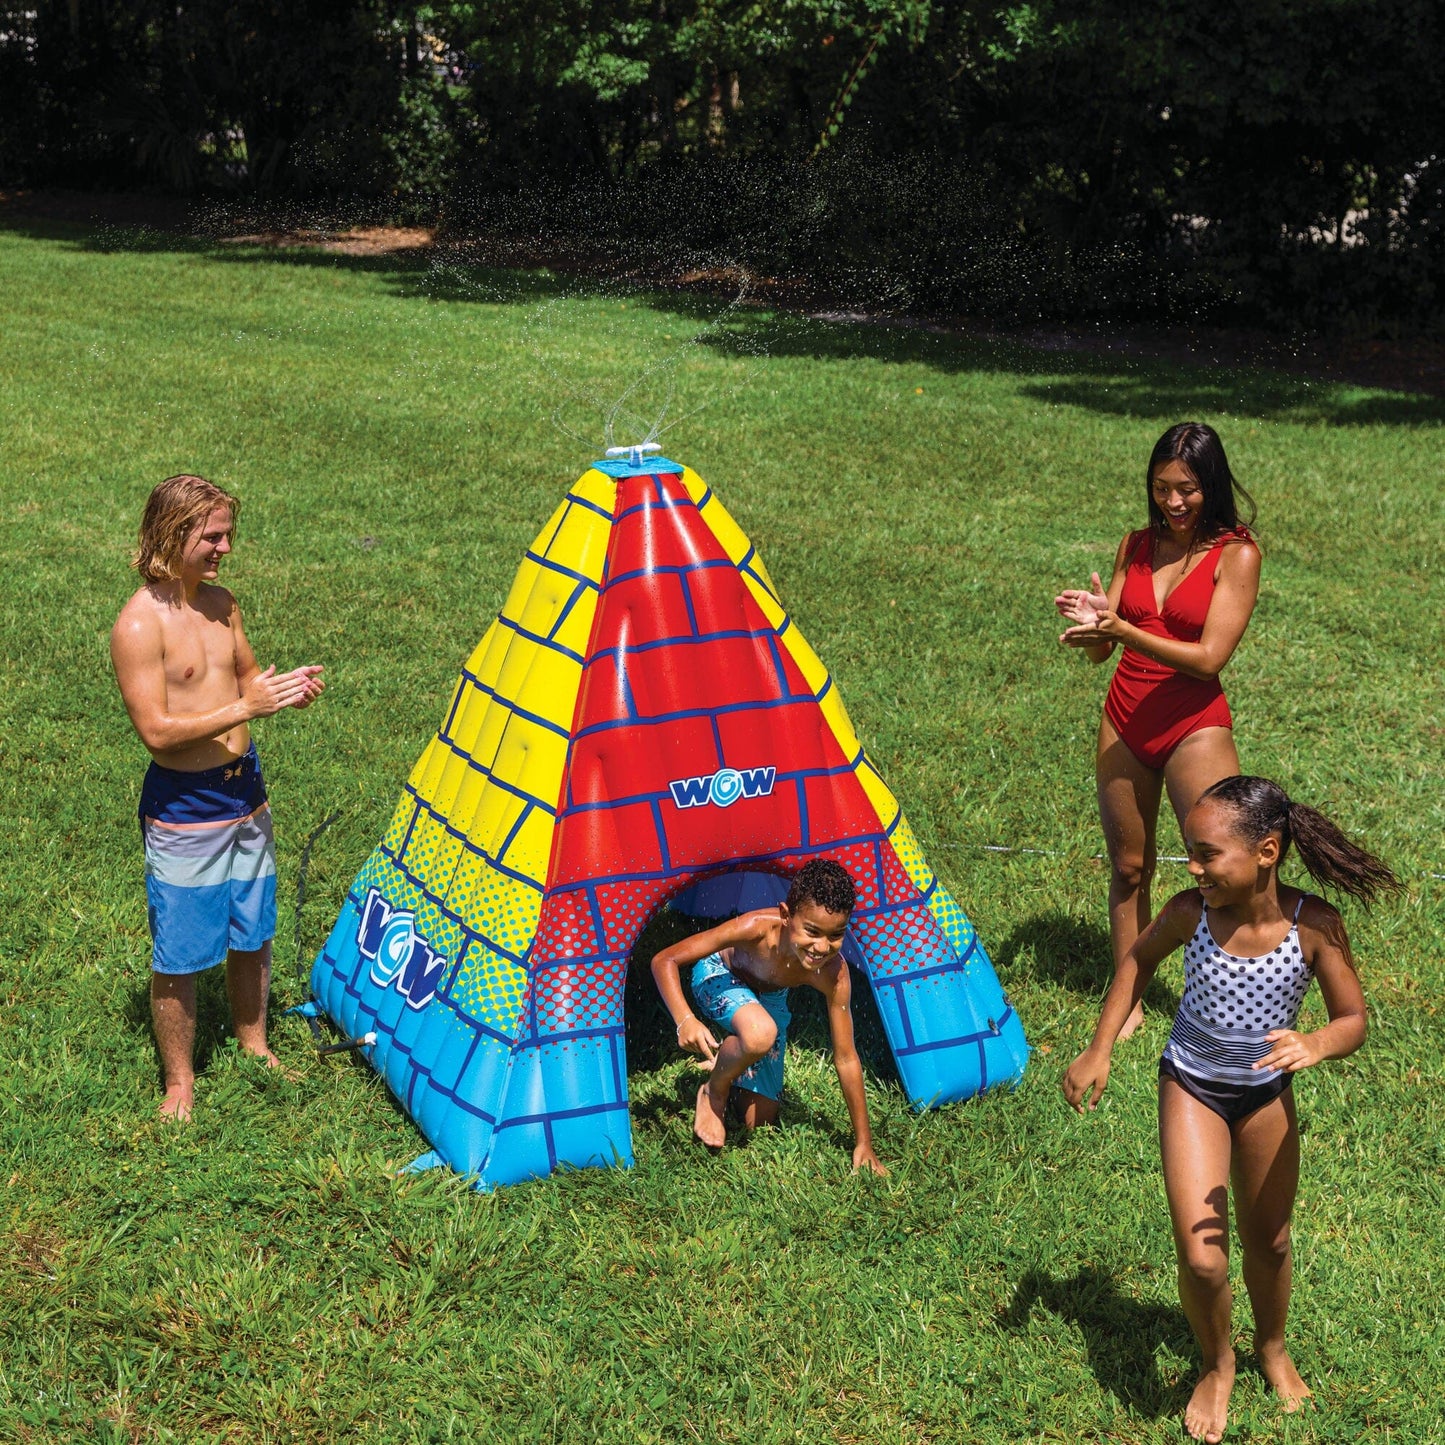 The Rainbow Pyramid Backyard Sprinkler